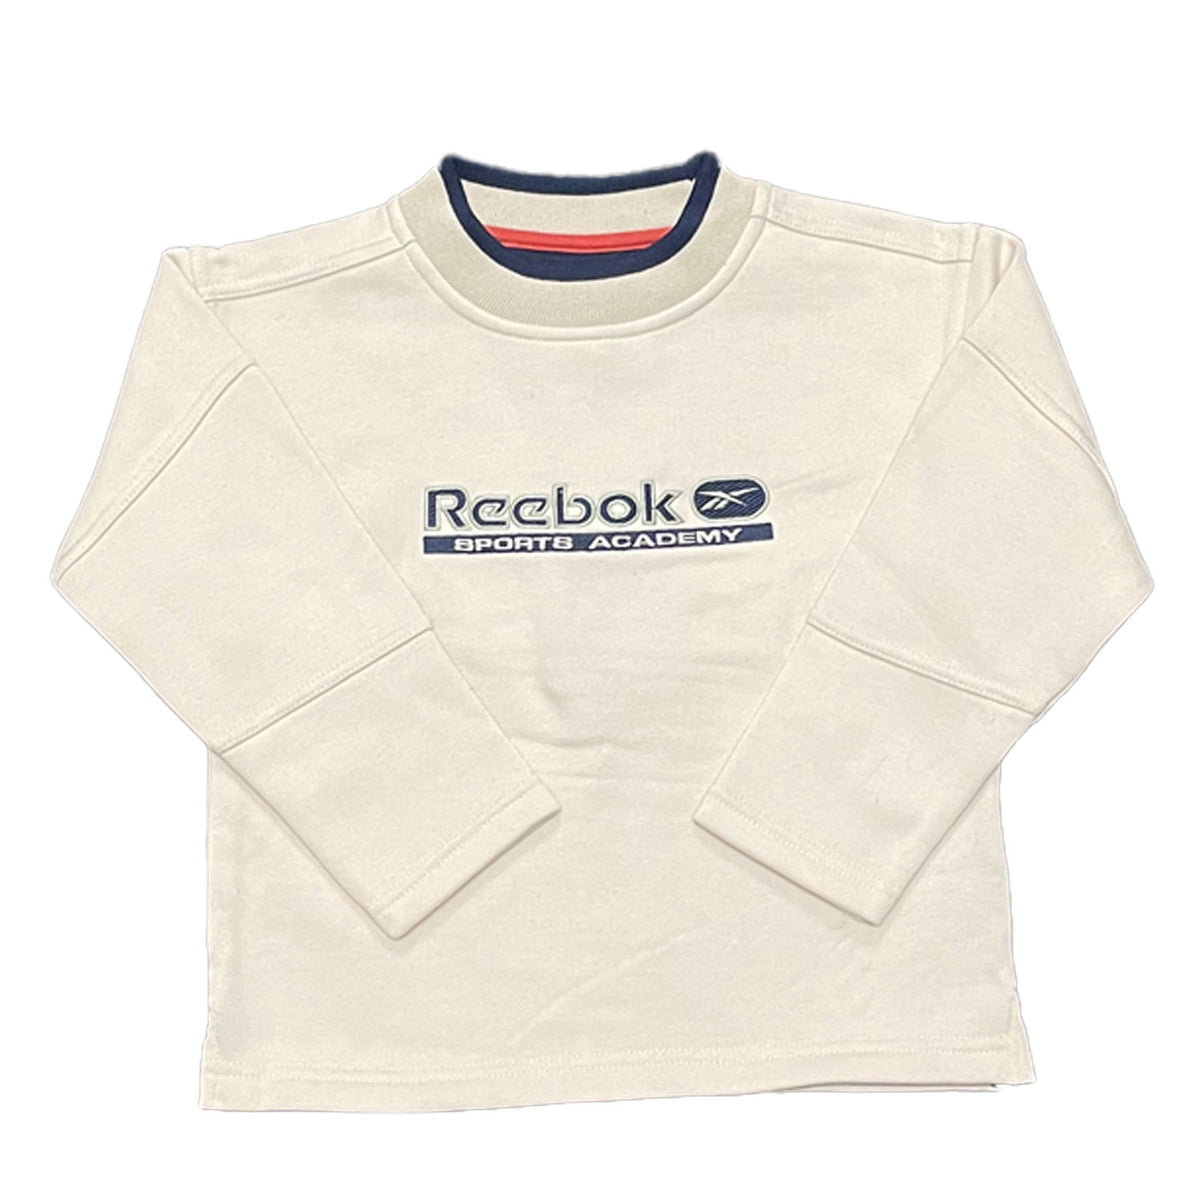 Reebok Infant Sports Academy Sweatshirt